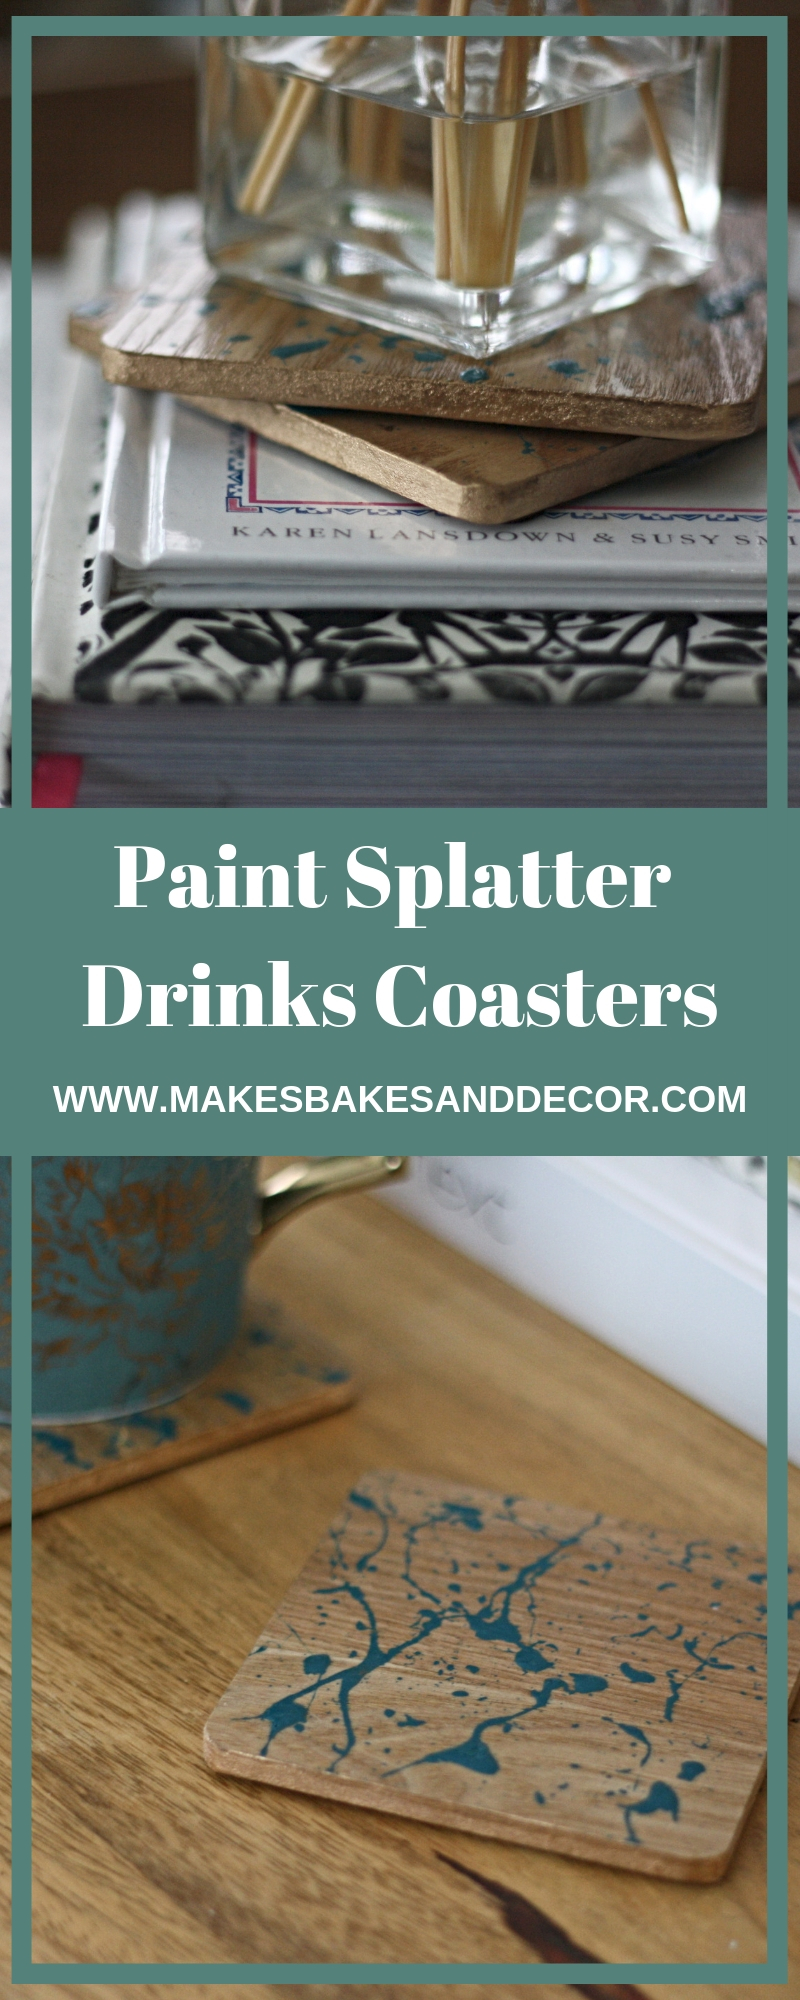 paint splatter drinks coasters